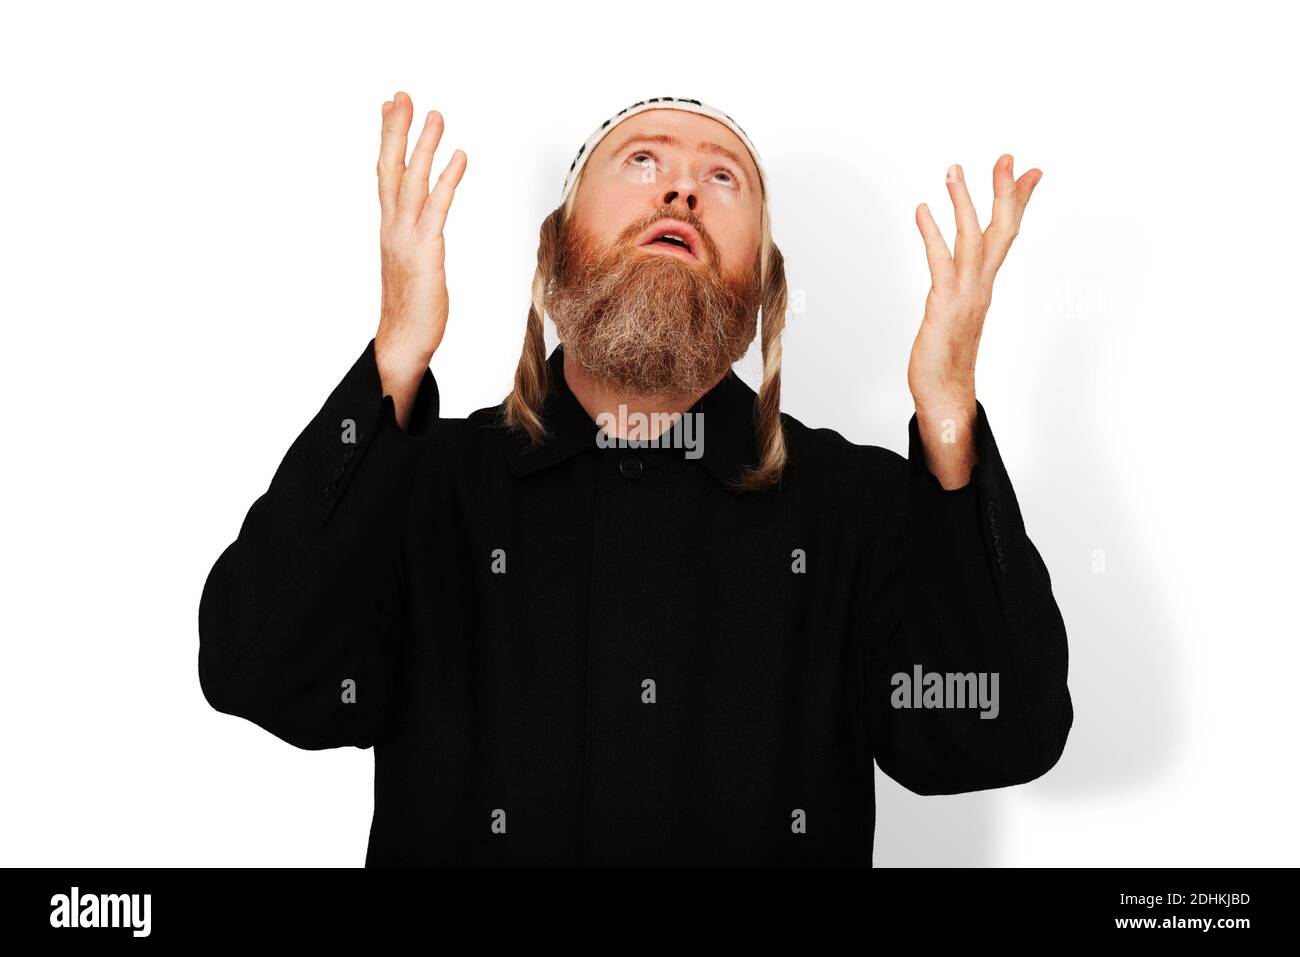 Praying bearded Jewish man with sidelocks in white kippah raising his hands to heaven. Studio portrait of hasid wearing black coat isolated on white Stock Photo